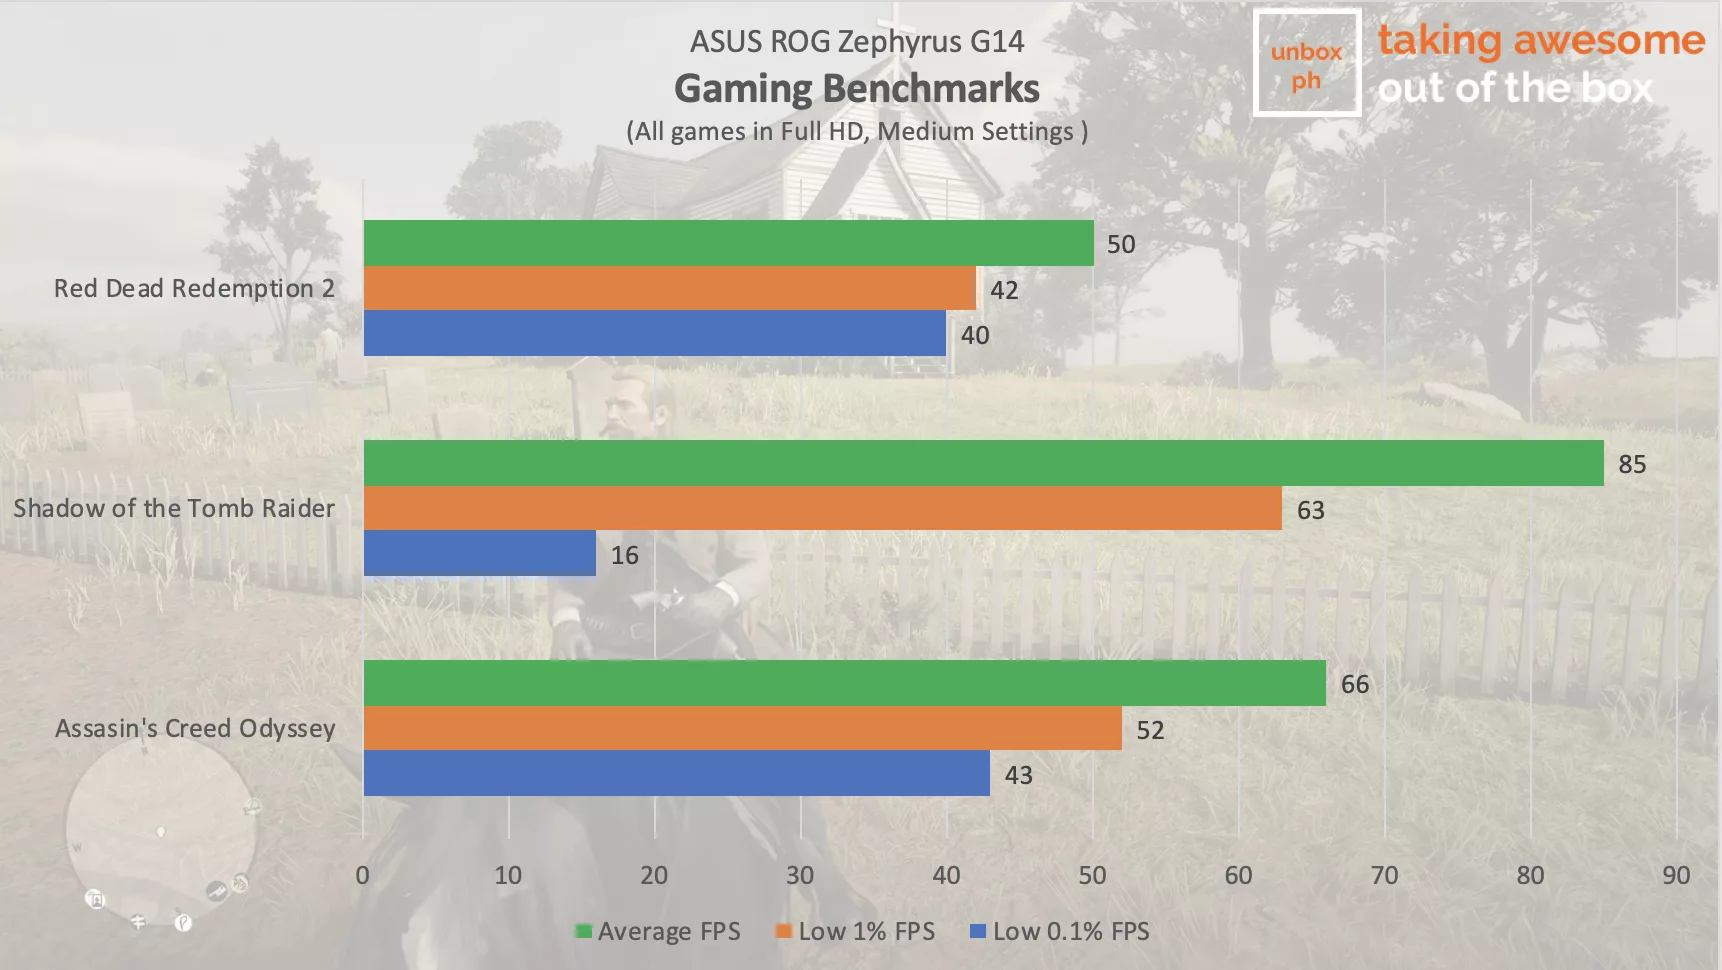 asus rog zephyrus g14 gaming benchmarks full hd and medium settings